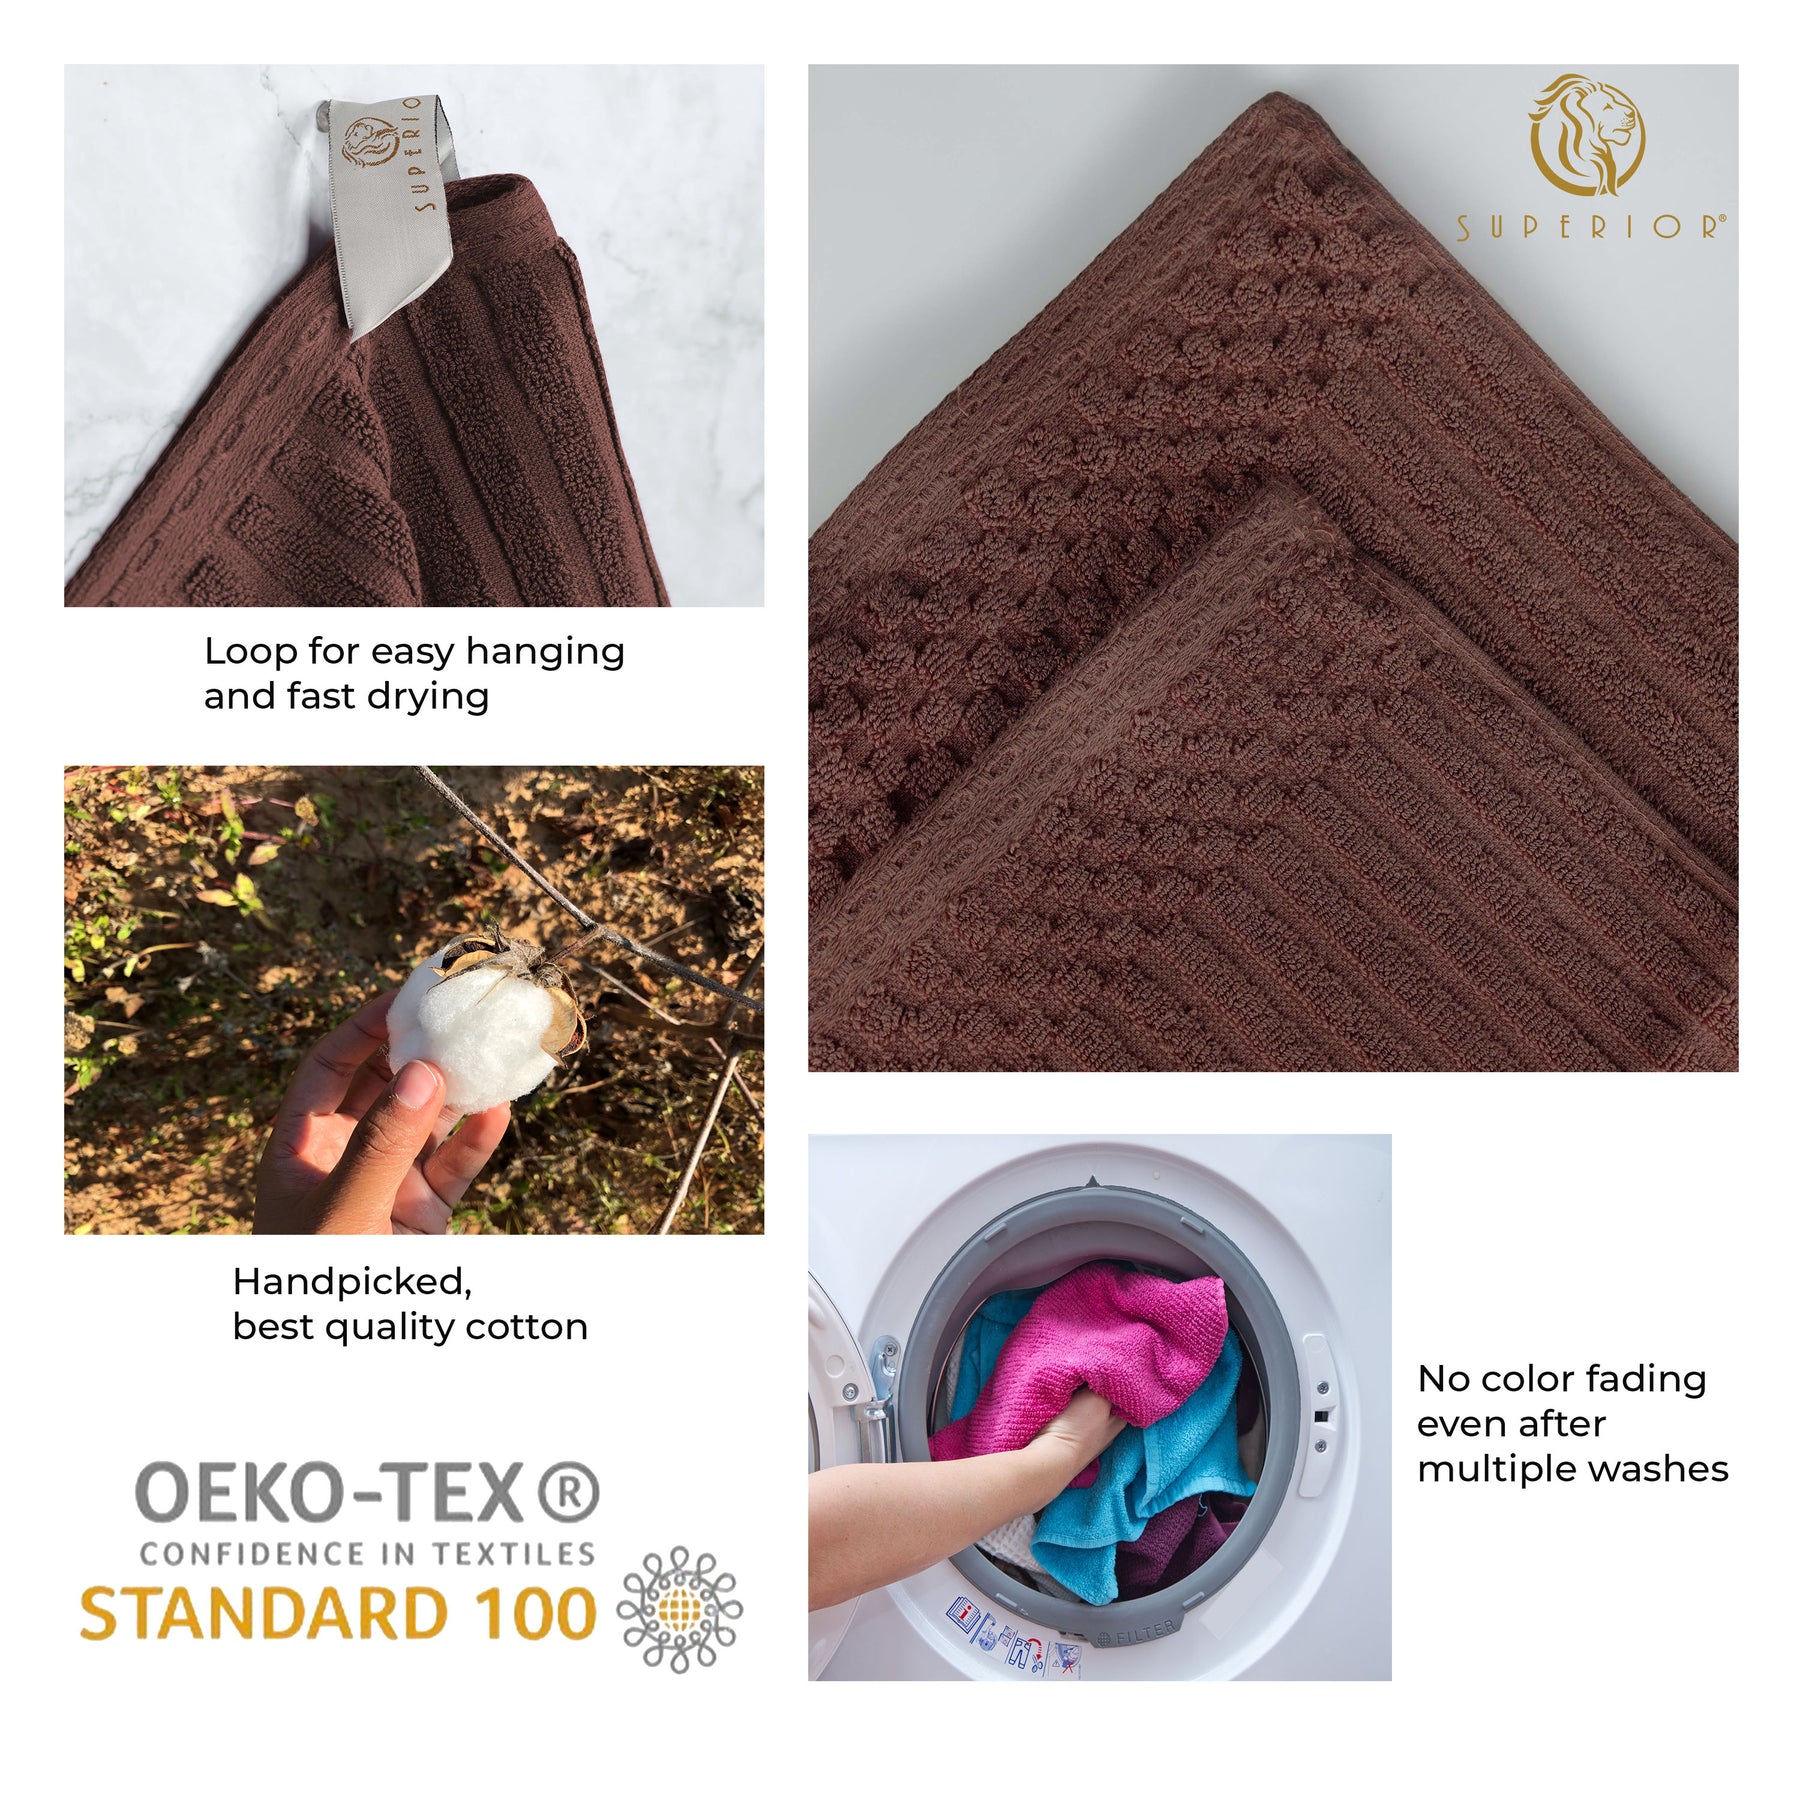 Superior Soho Ribbed Textured Cotton Ultra-Absorbent Hand Towel and Bath Sheet Set - Java